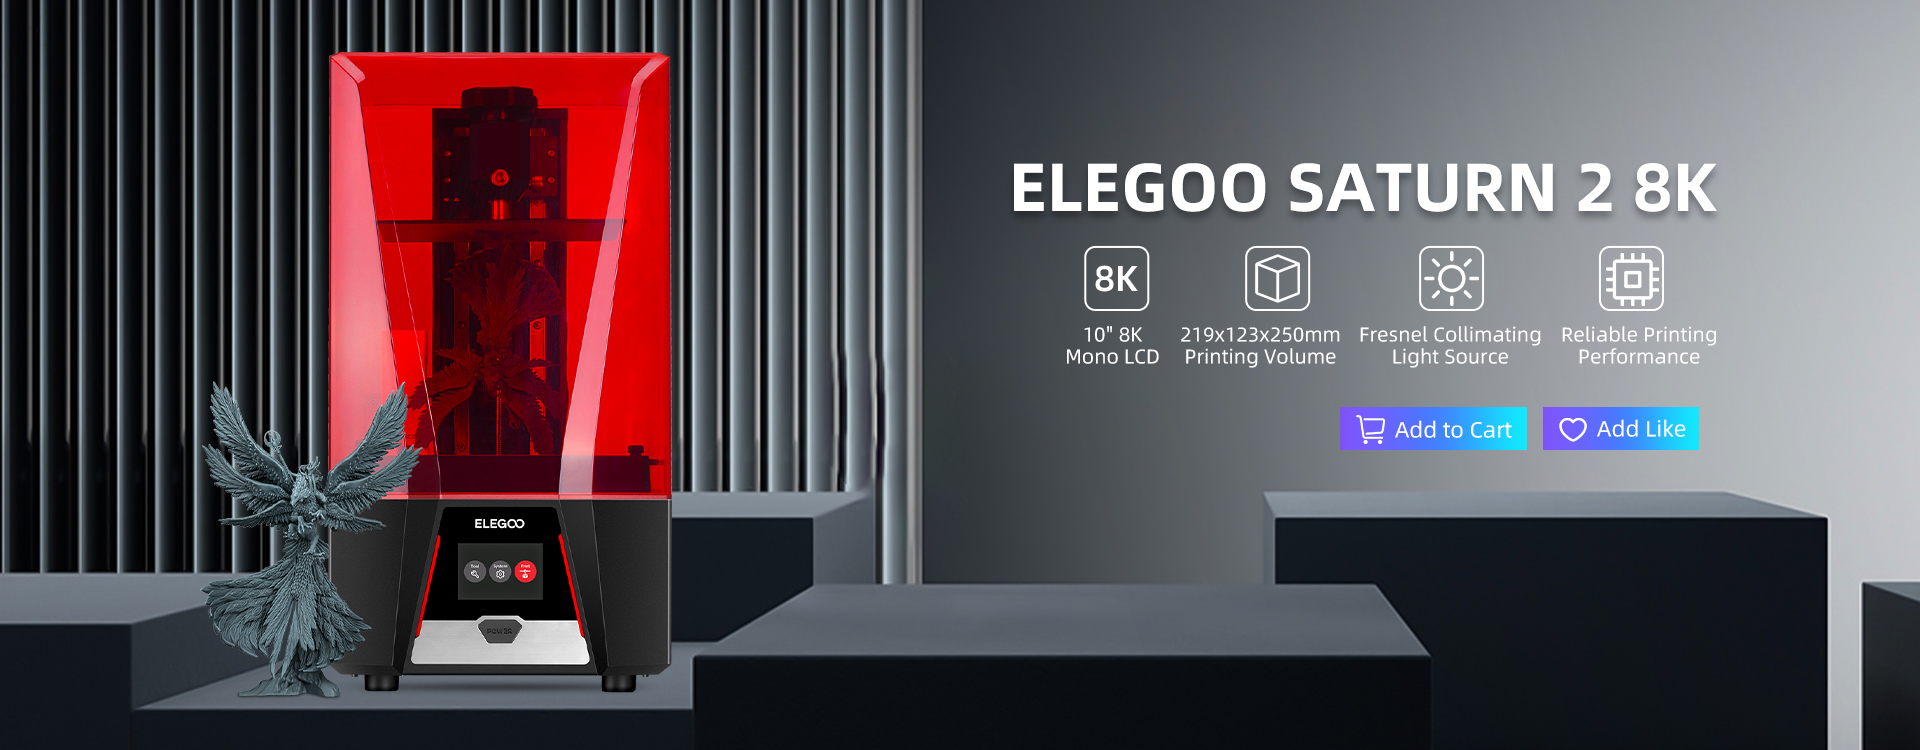 Elegoo Uno R3 Project Kit Arduino  Elegoo Smart Robot Car Kit - Uno R3  Project Smart - Aliexpress